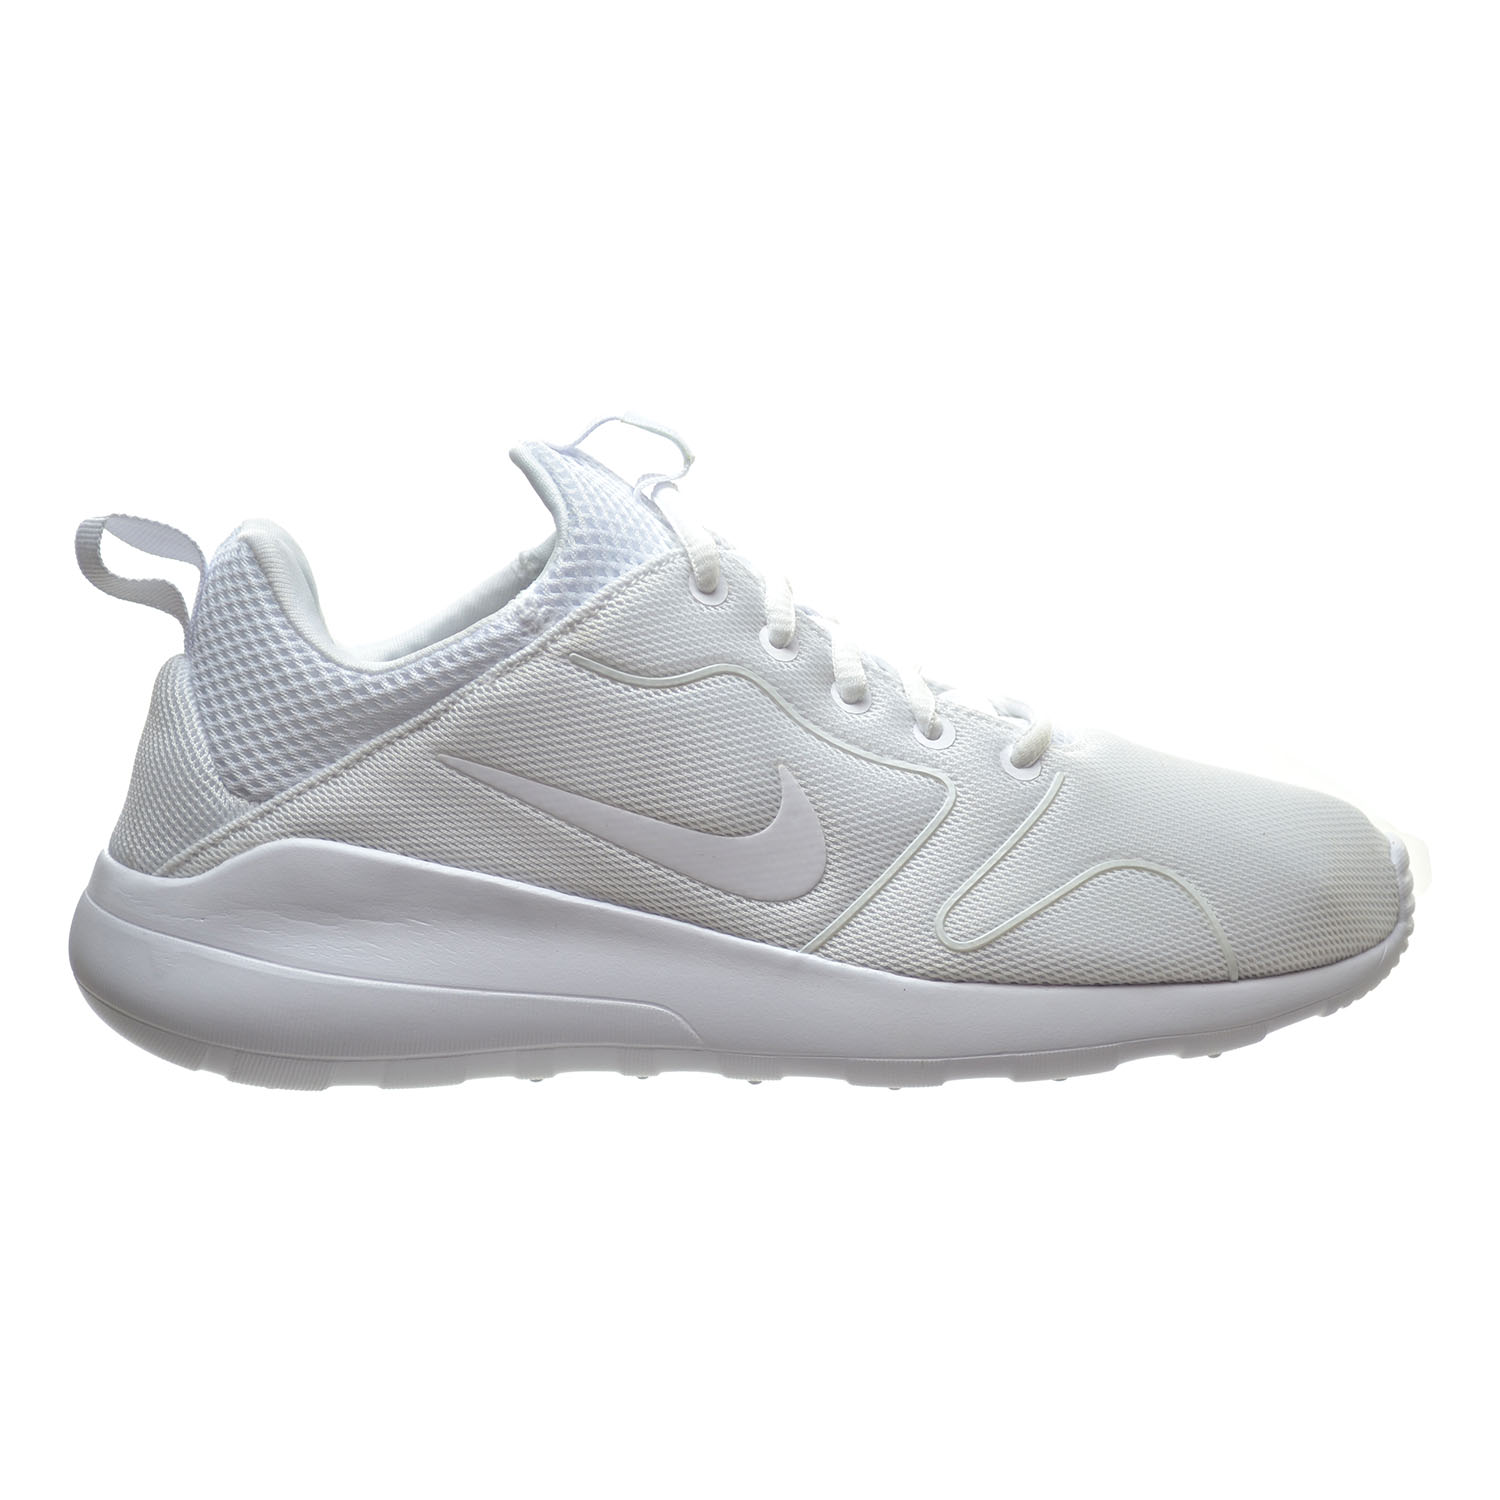 gritar Gracias Espíritu Nike Kaishi 2.0 Men's Shoes White/White 833411-110 (9.5 D(M) US)